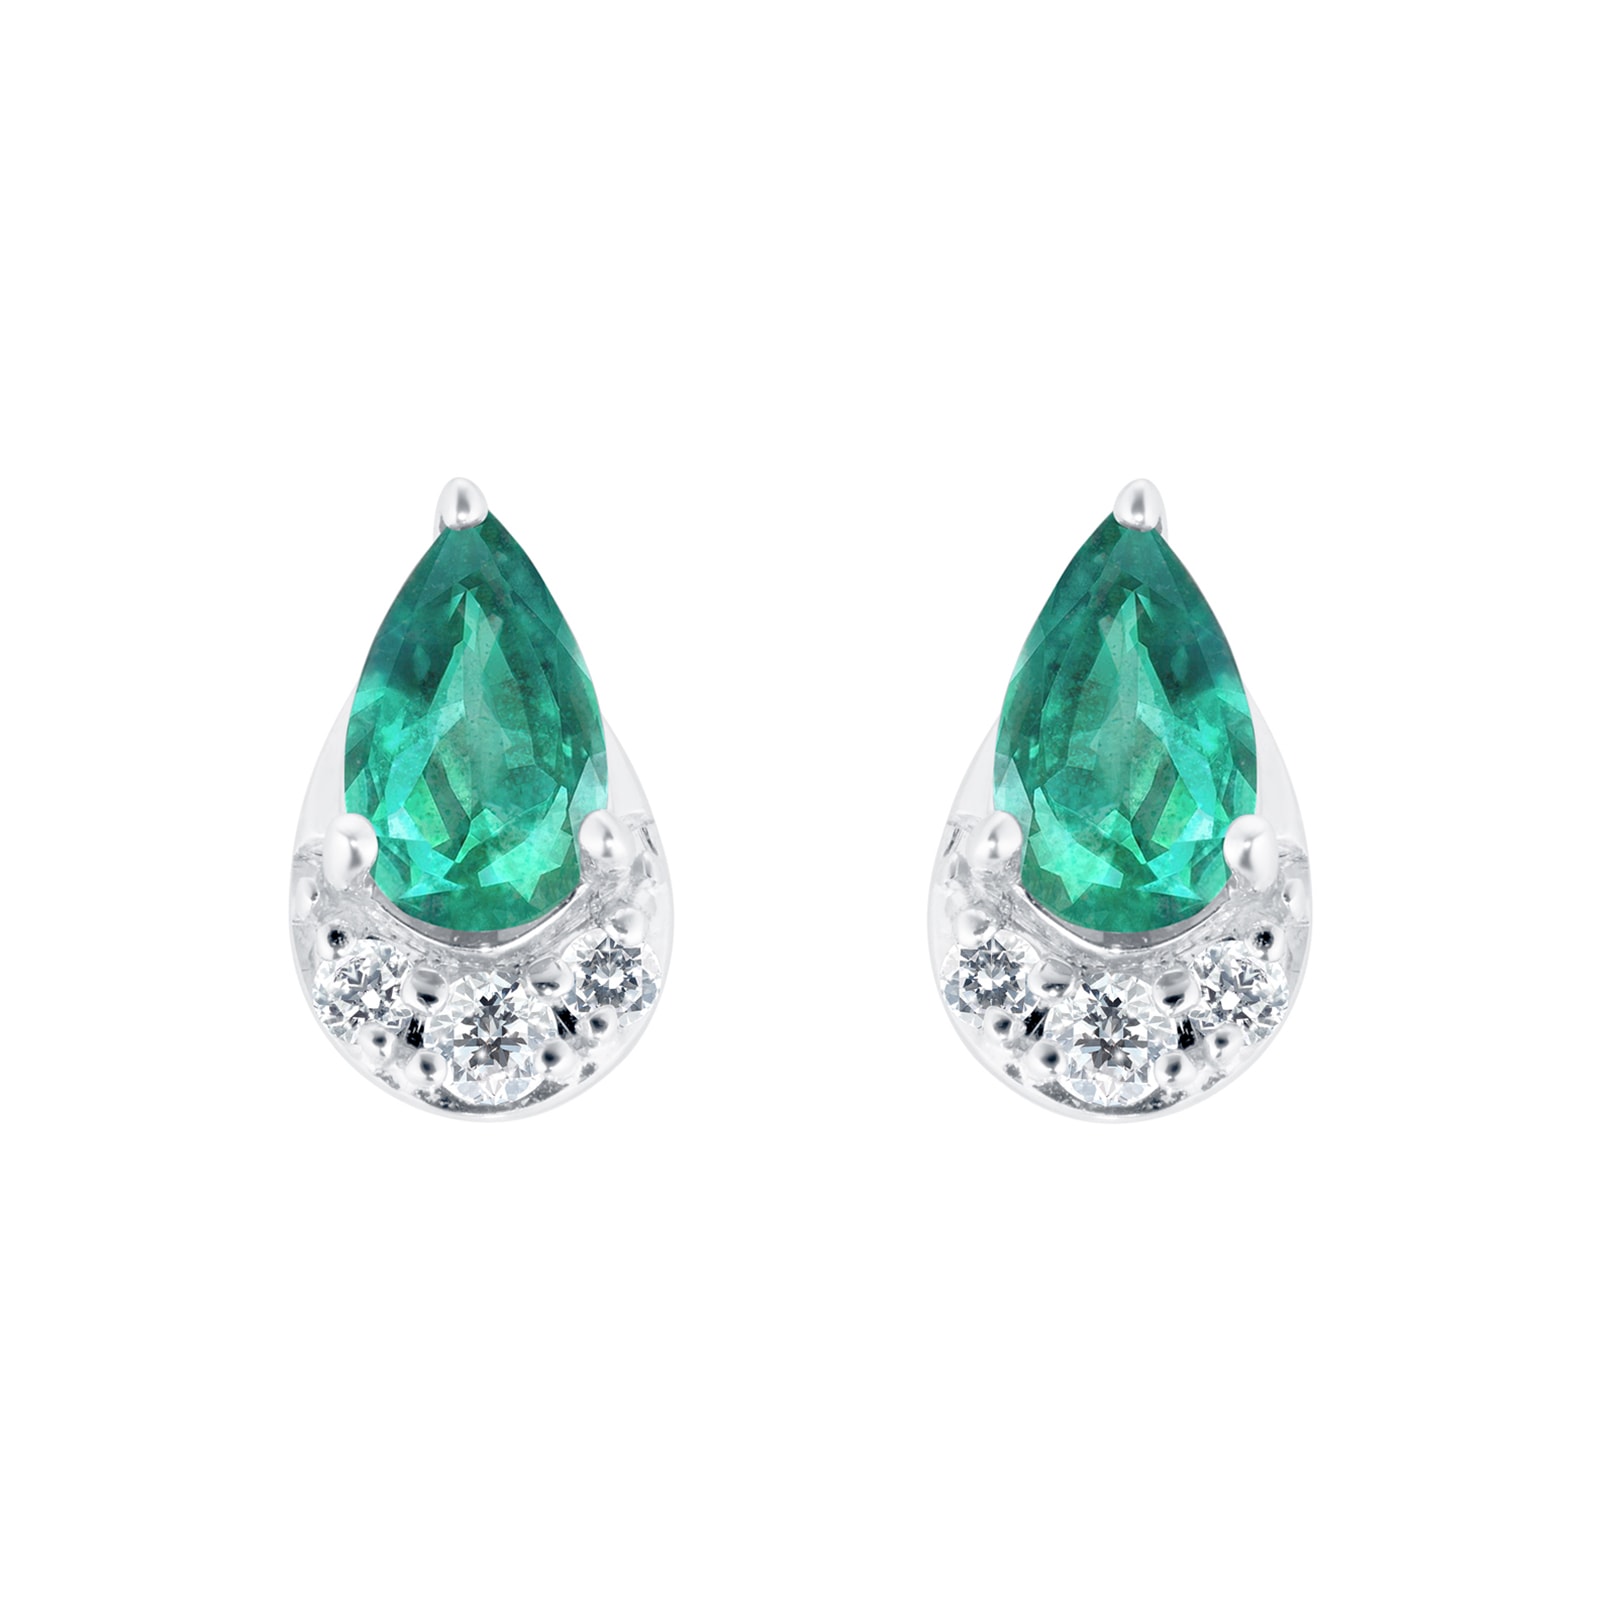 9ct White Gold Pear Cut Emerald & Diamond Stud Earrings